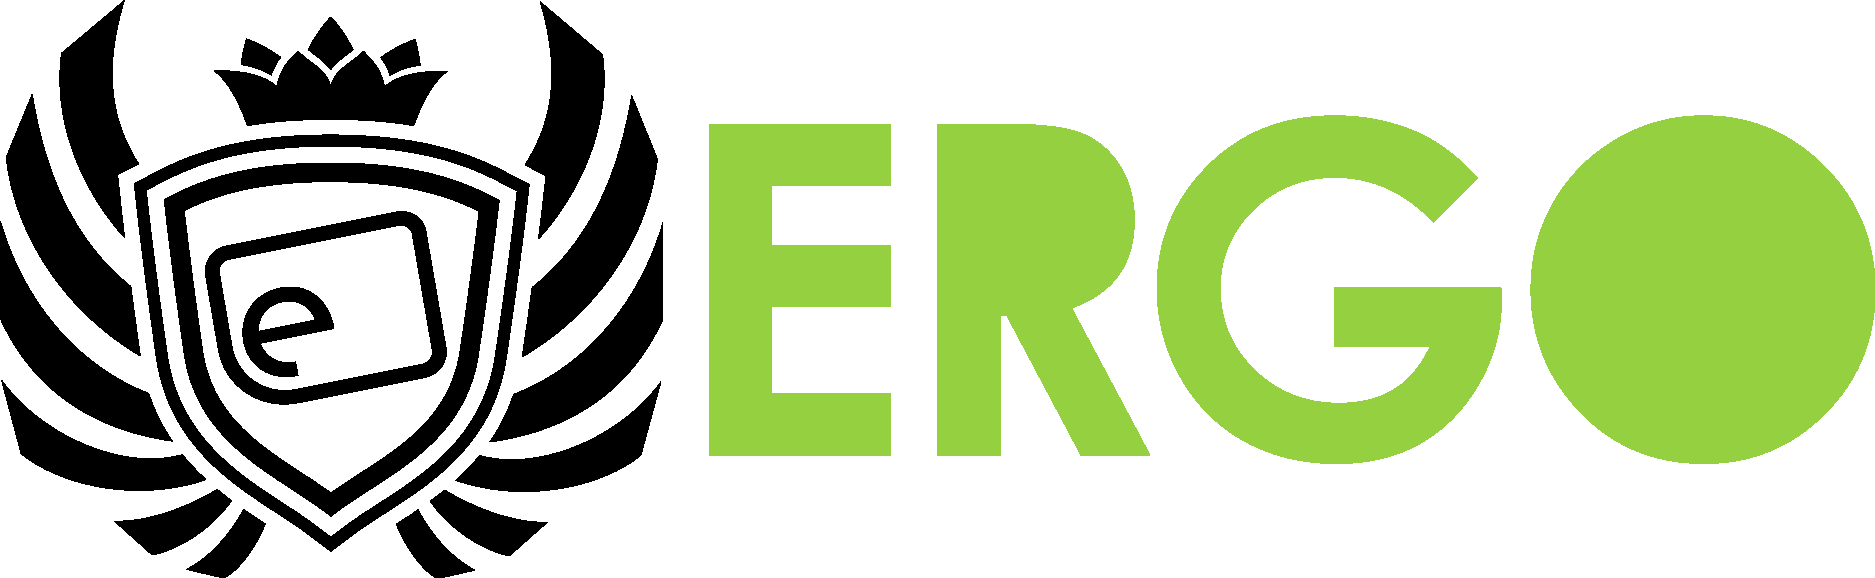 Ergophobia Logo Vector